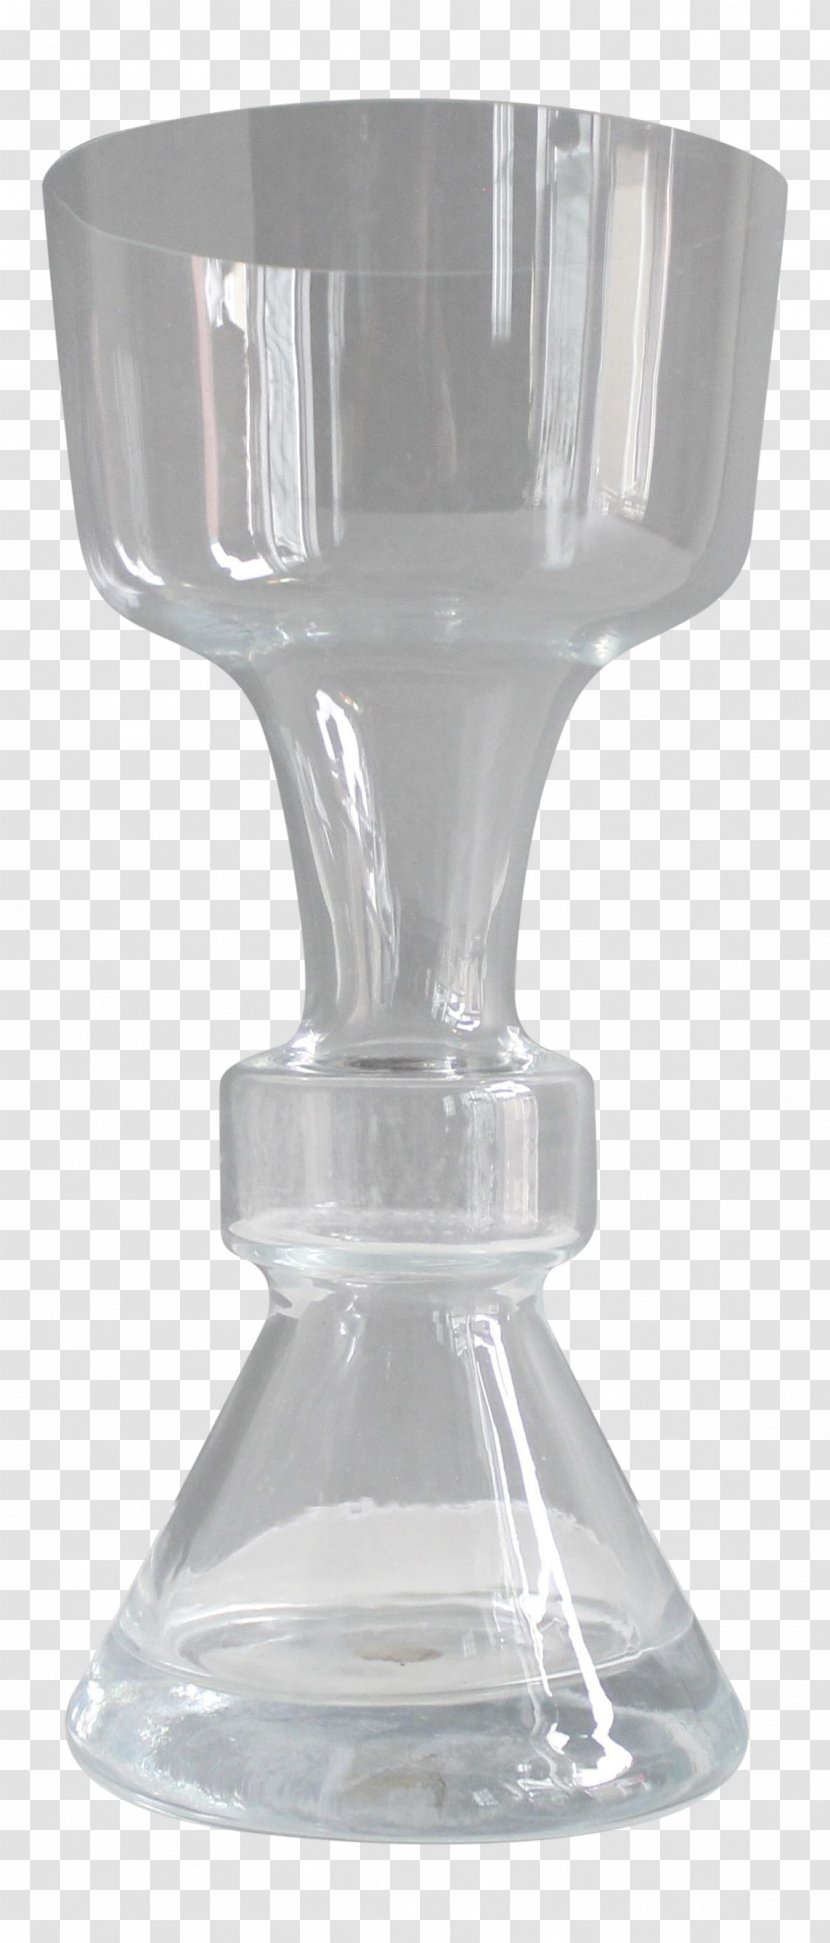 Table-glass Tableware Stemware - Tableglass - Hourglass Transparent PNG